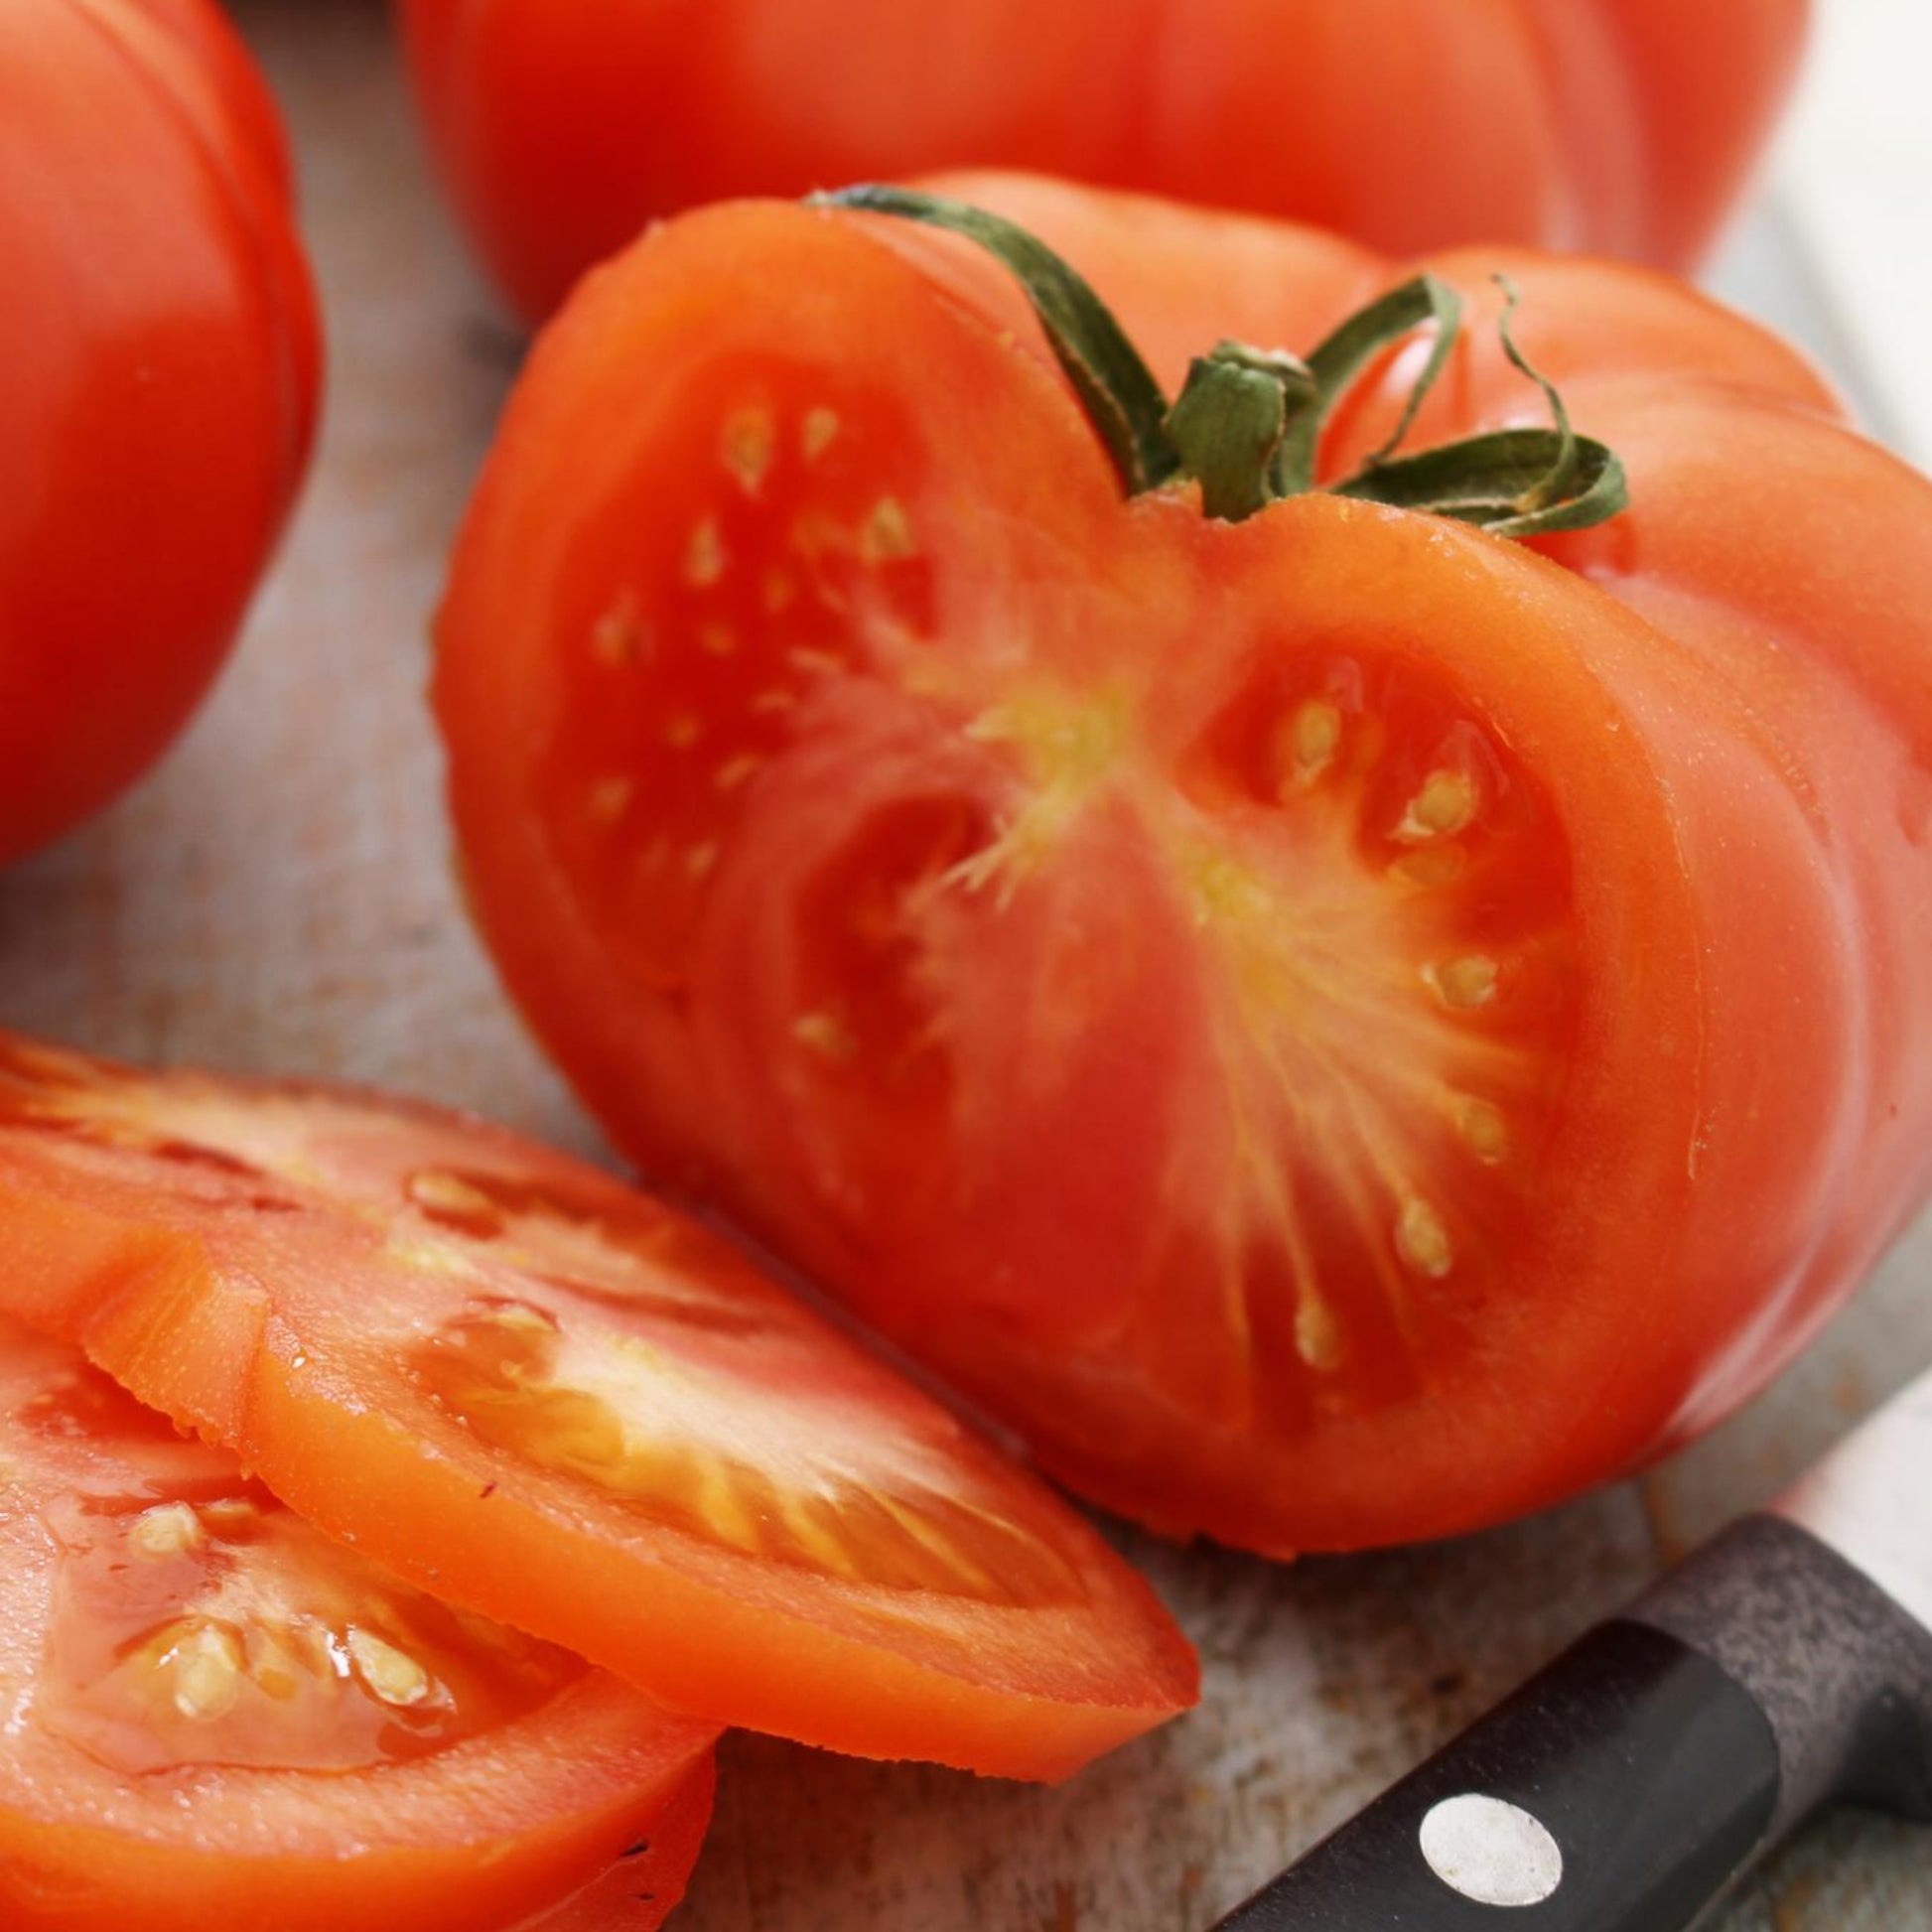 Beefsteak Tomato Seeds - Seeds - Organic - Non Gmo - Heirloom Seeds – Vegetable Seeds - USA Garden Seeds